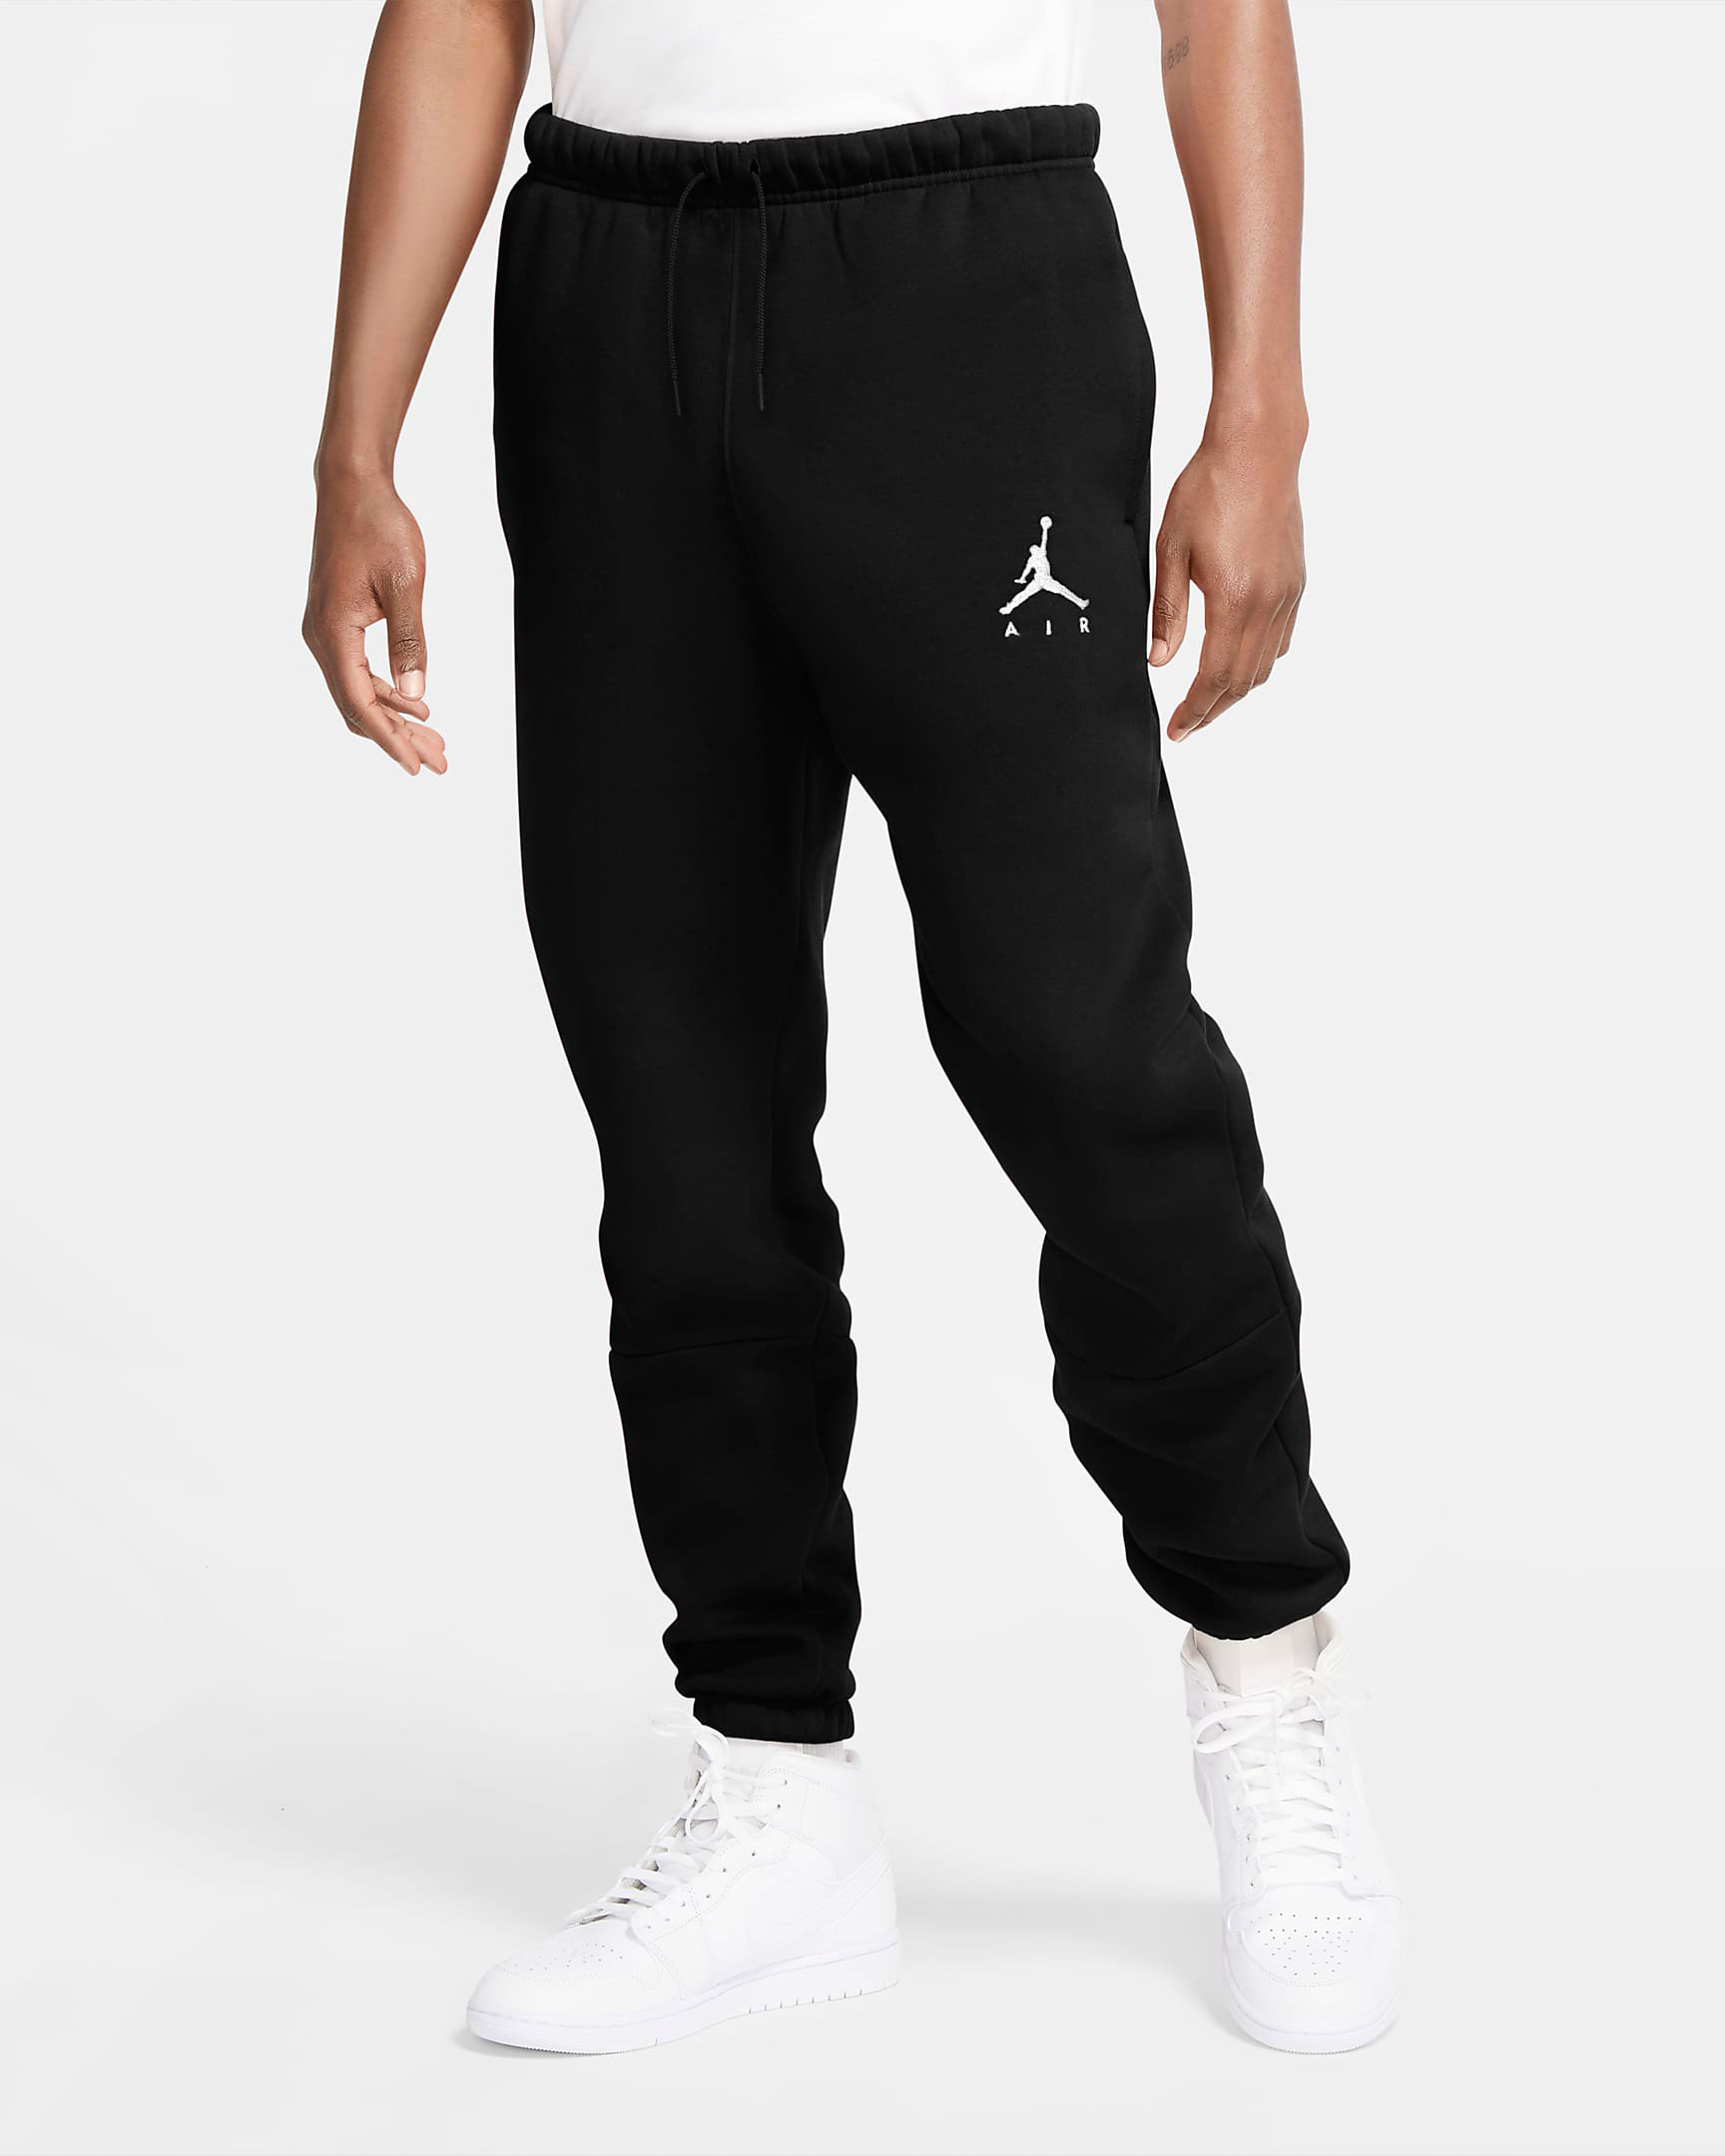 jordan-11-jubilee-black-white-jogger-pants-match